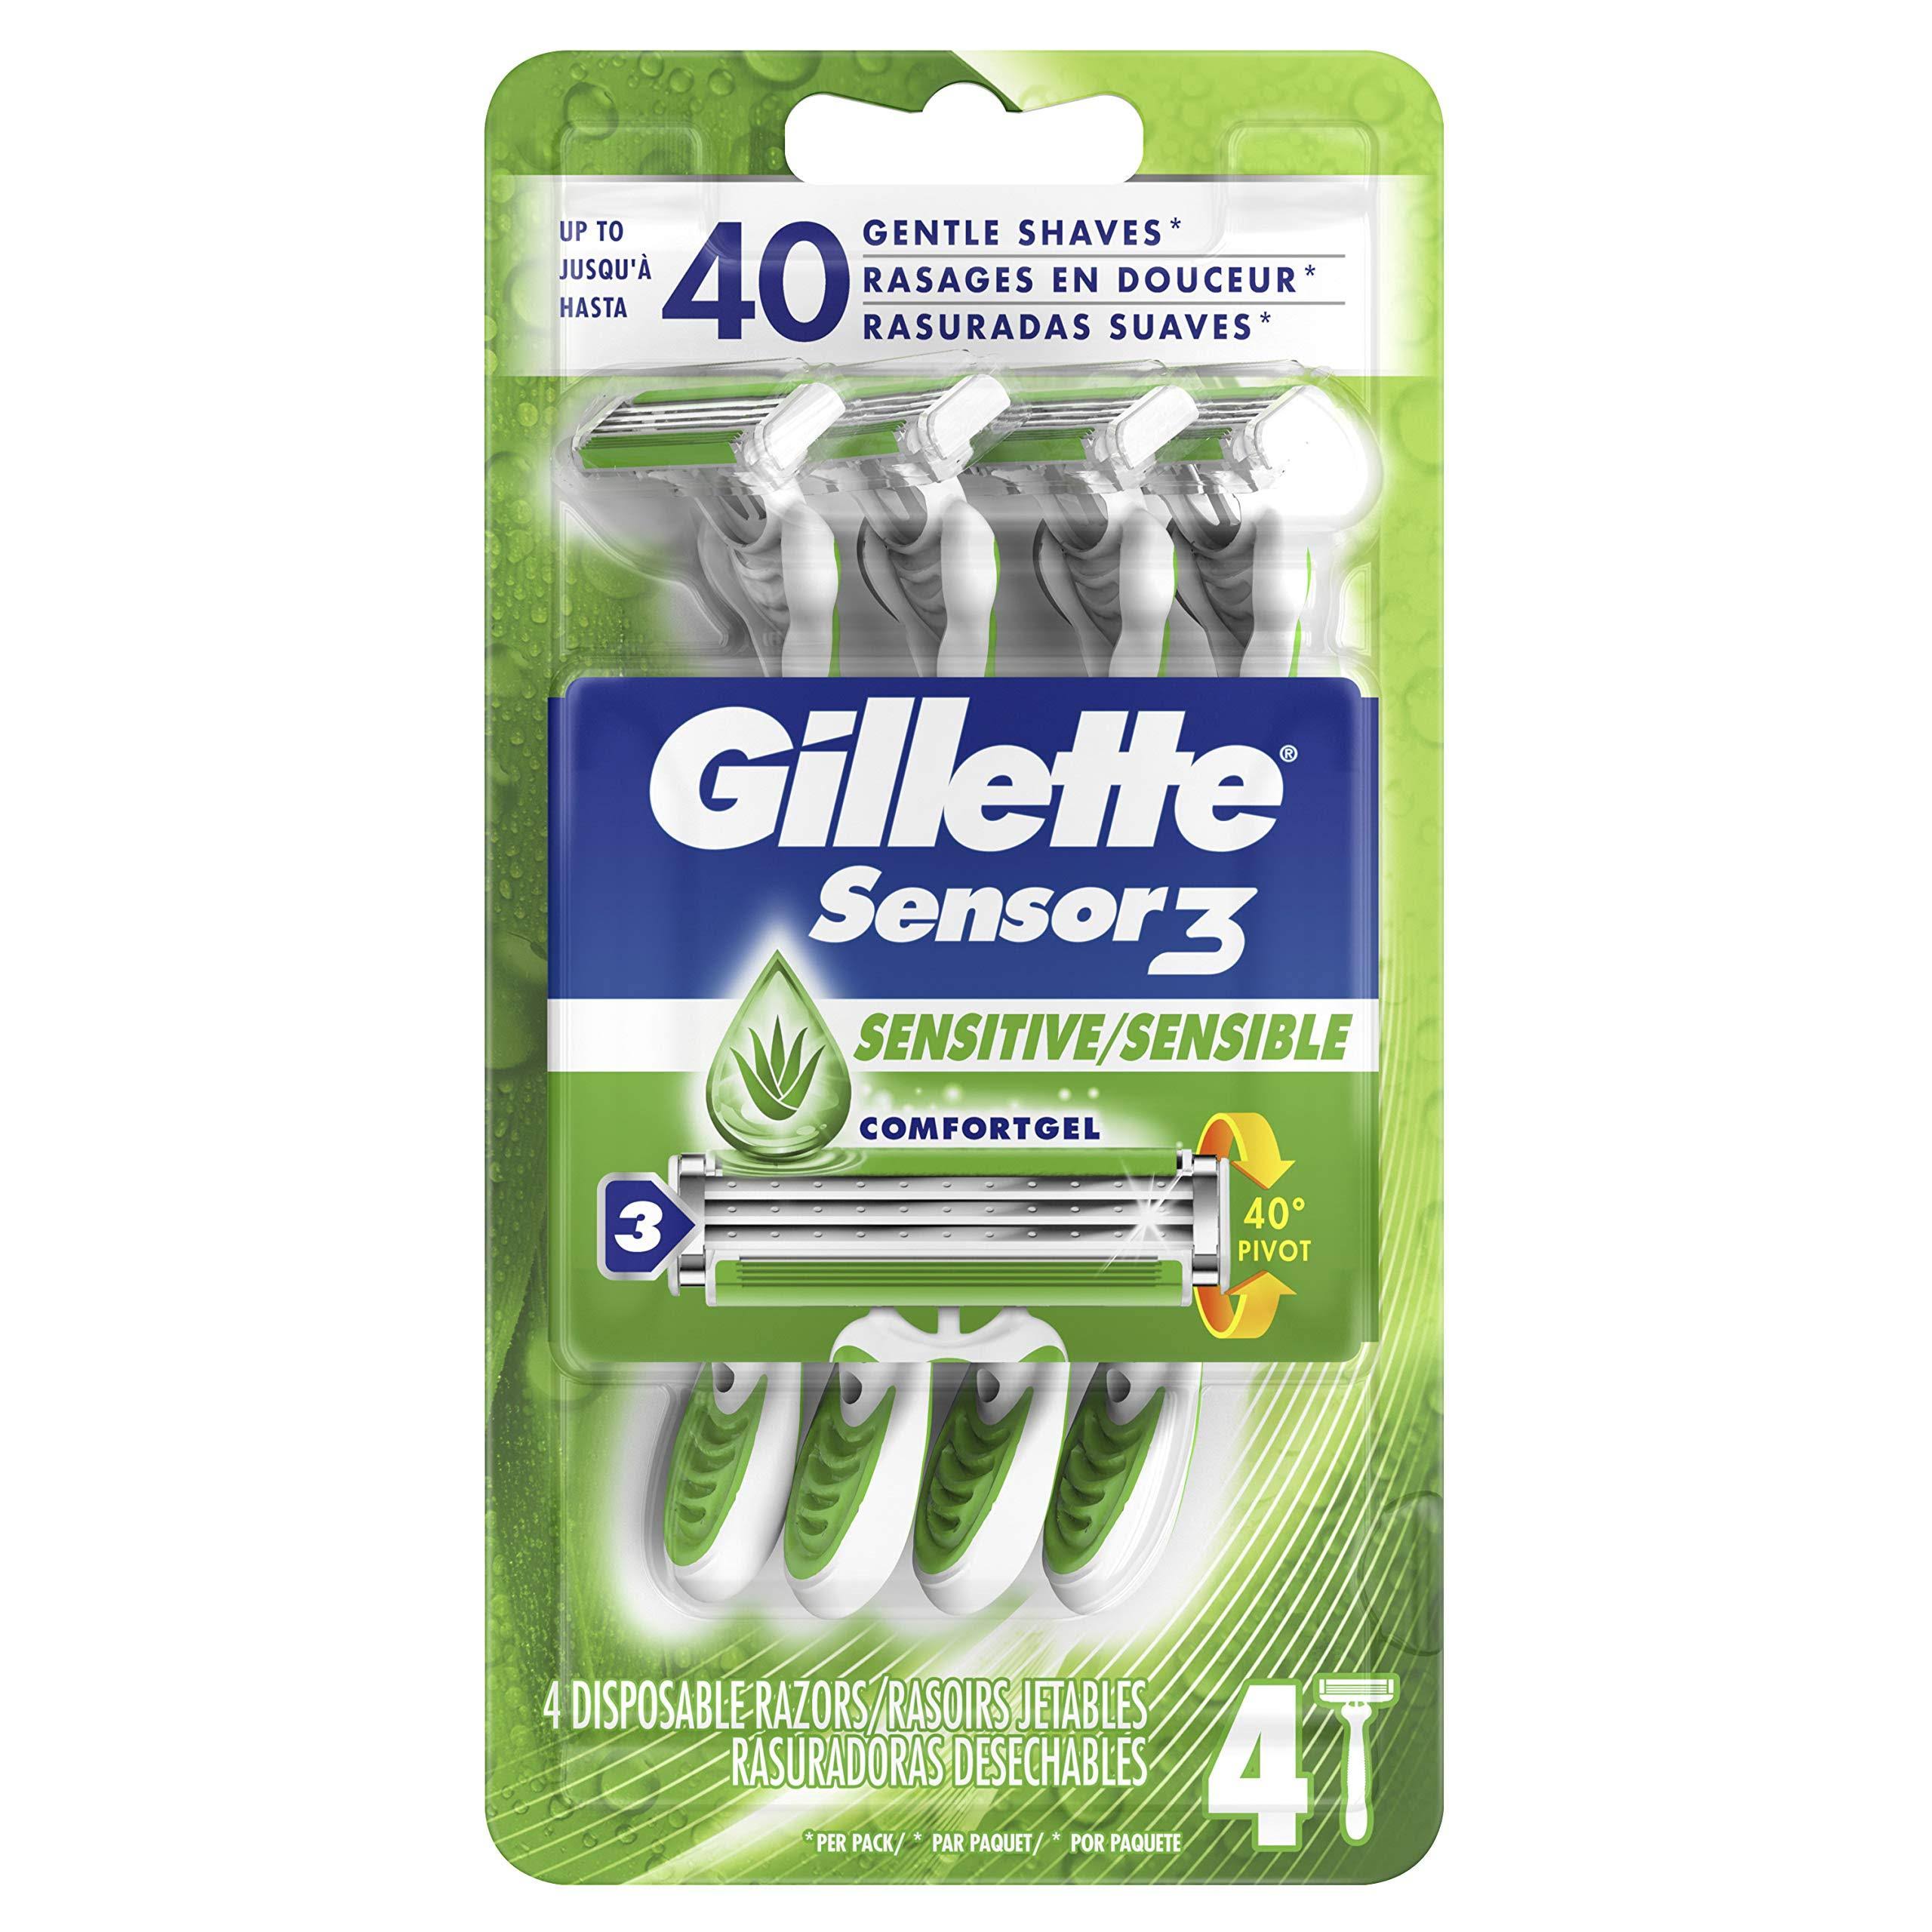 Gillette Sensor 3 Sensitive Disposable Razors - 4 Pack